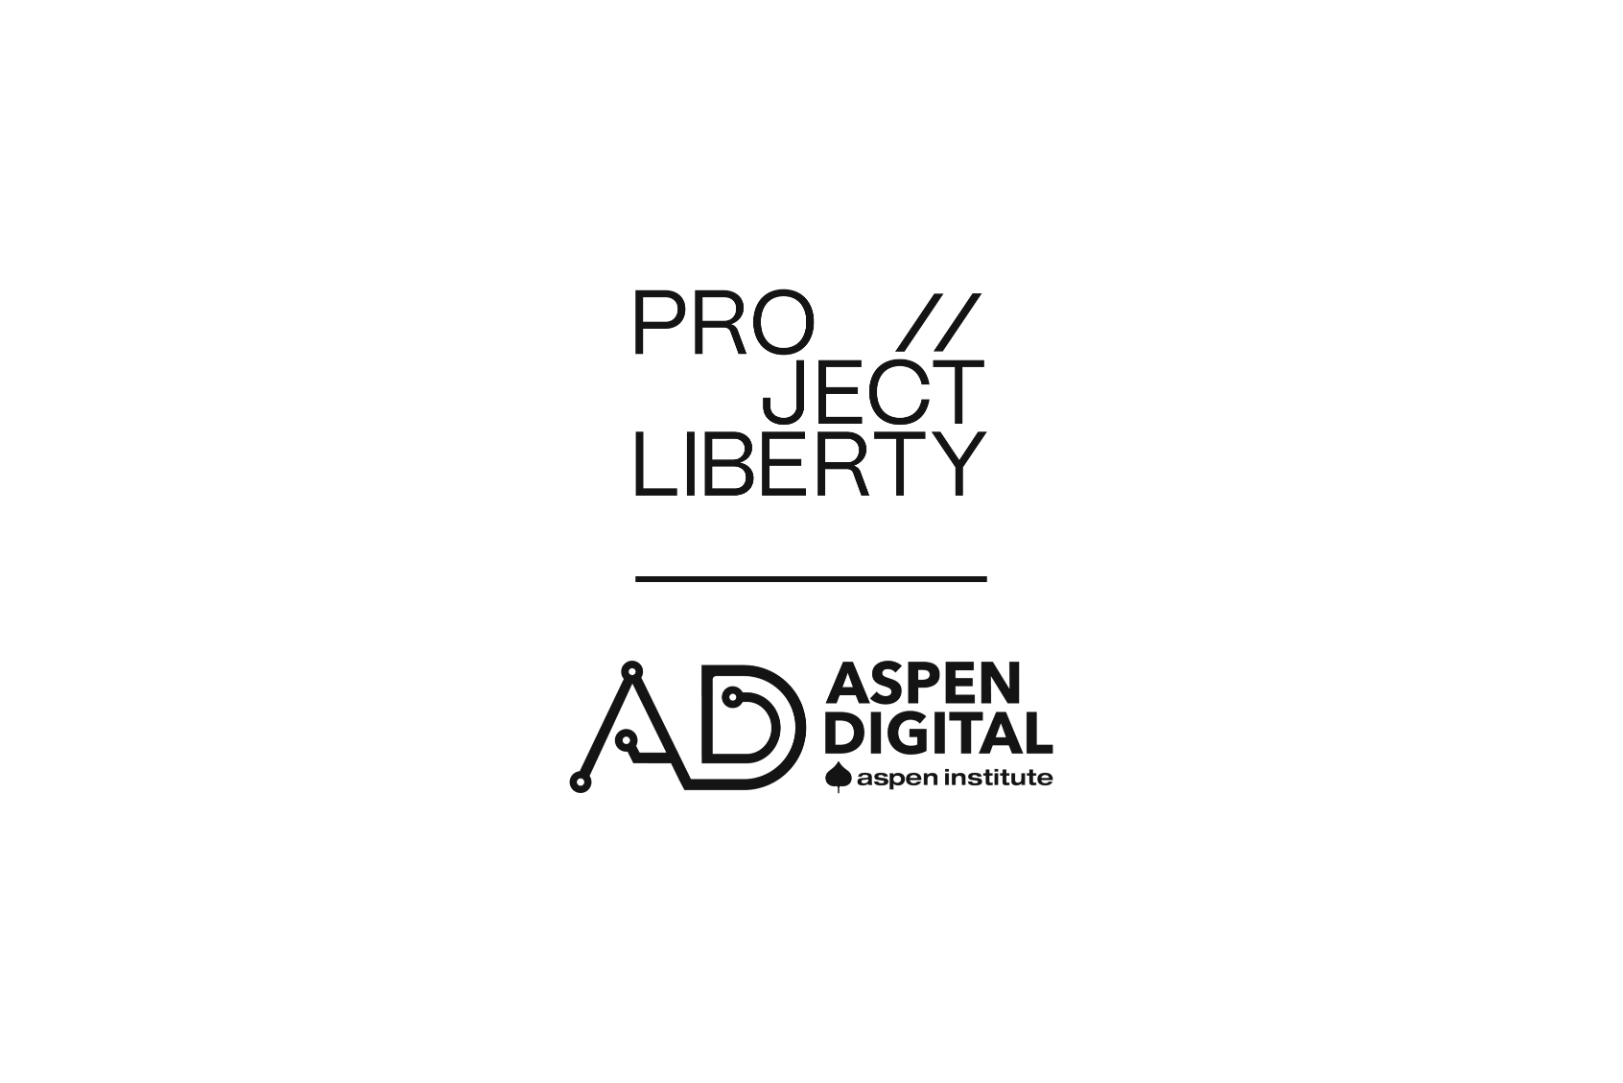 Project Liberty and Aspen Digital Aspen Institute